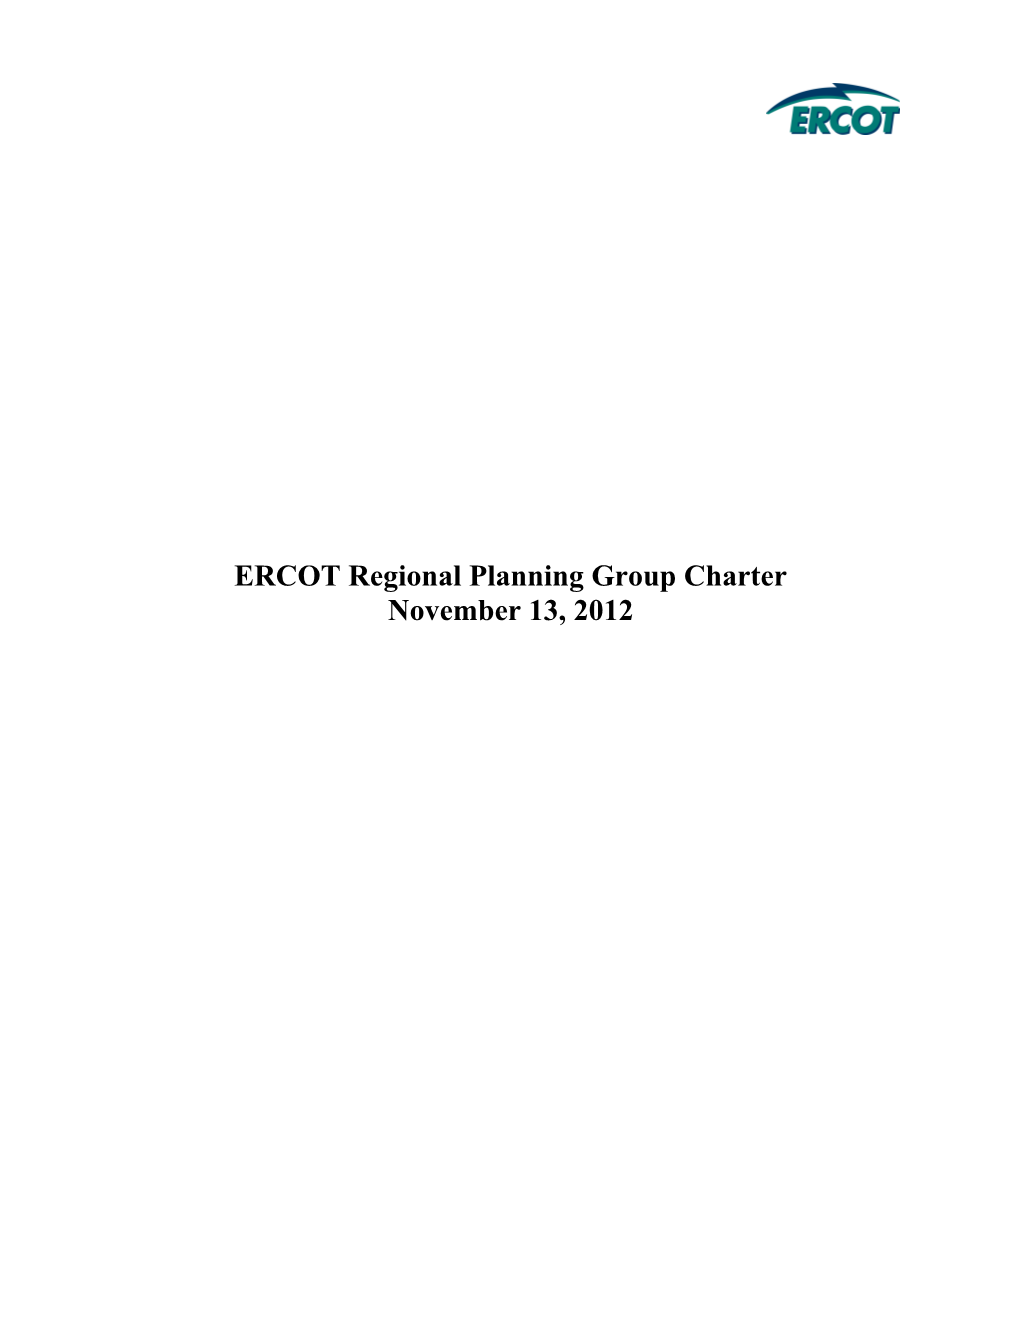 ERCOT REGIONAL PLANNING GROUP Charternovember 13, 2012